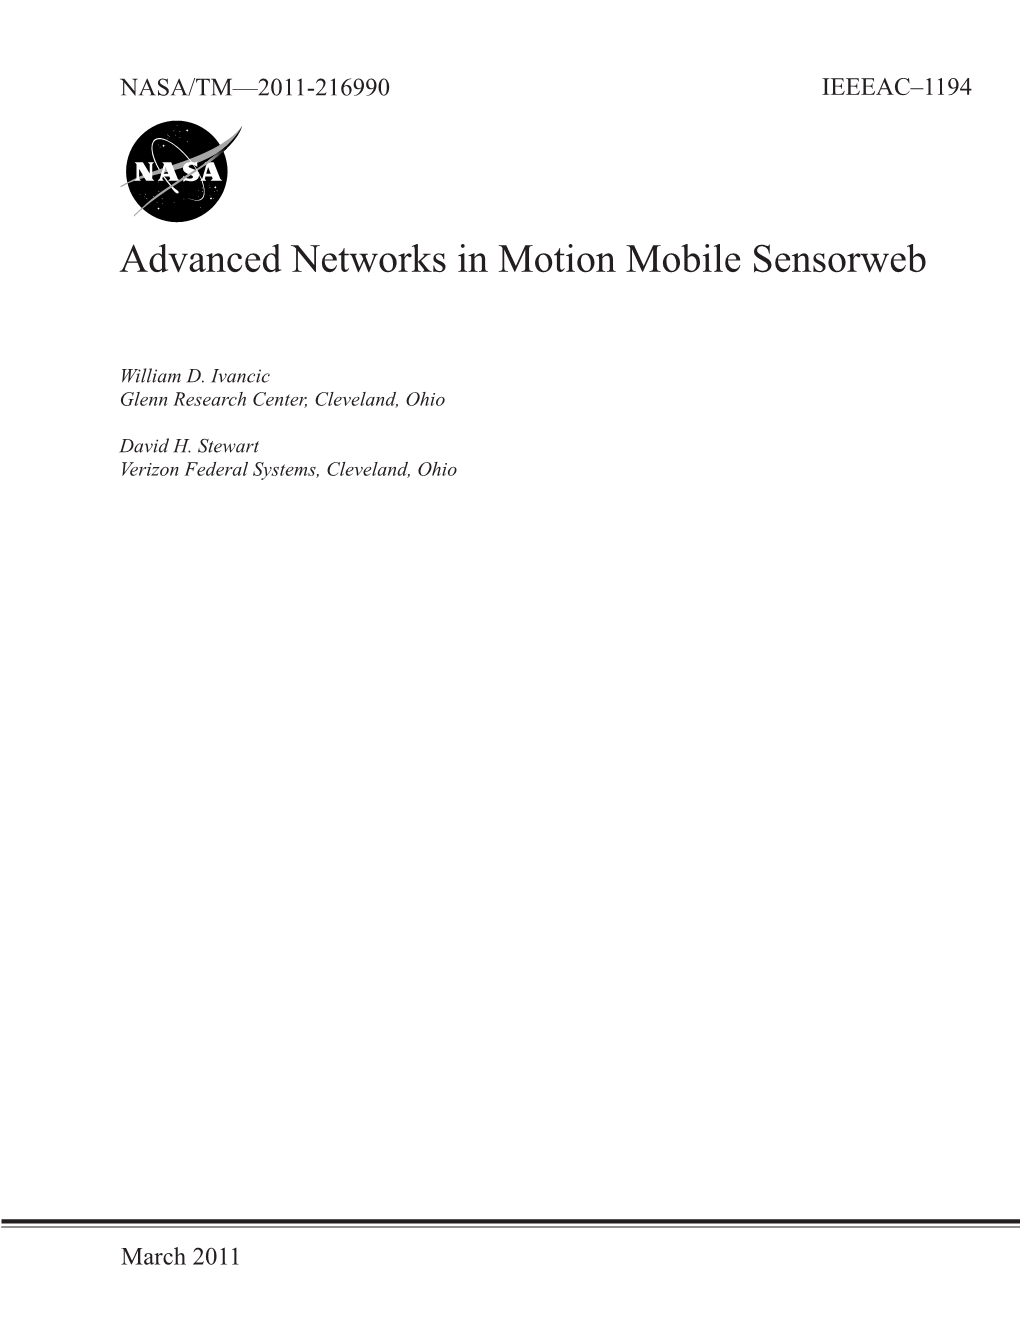 Advanced Networks in Motion Mobile Sensorweb